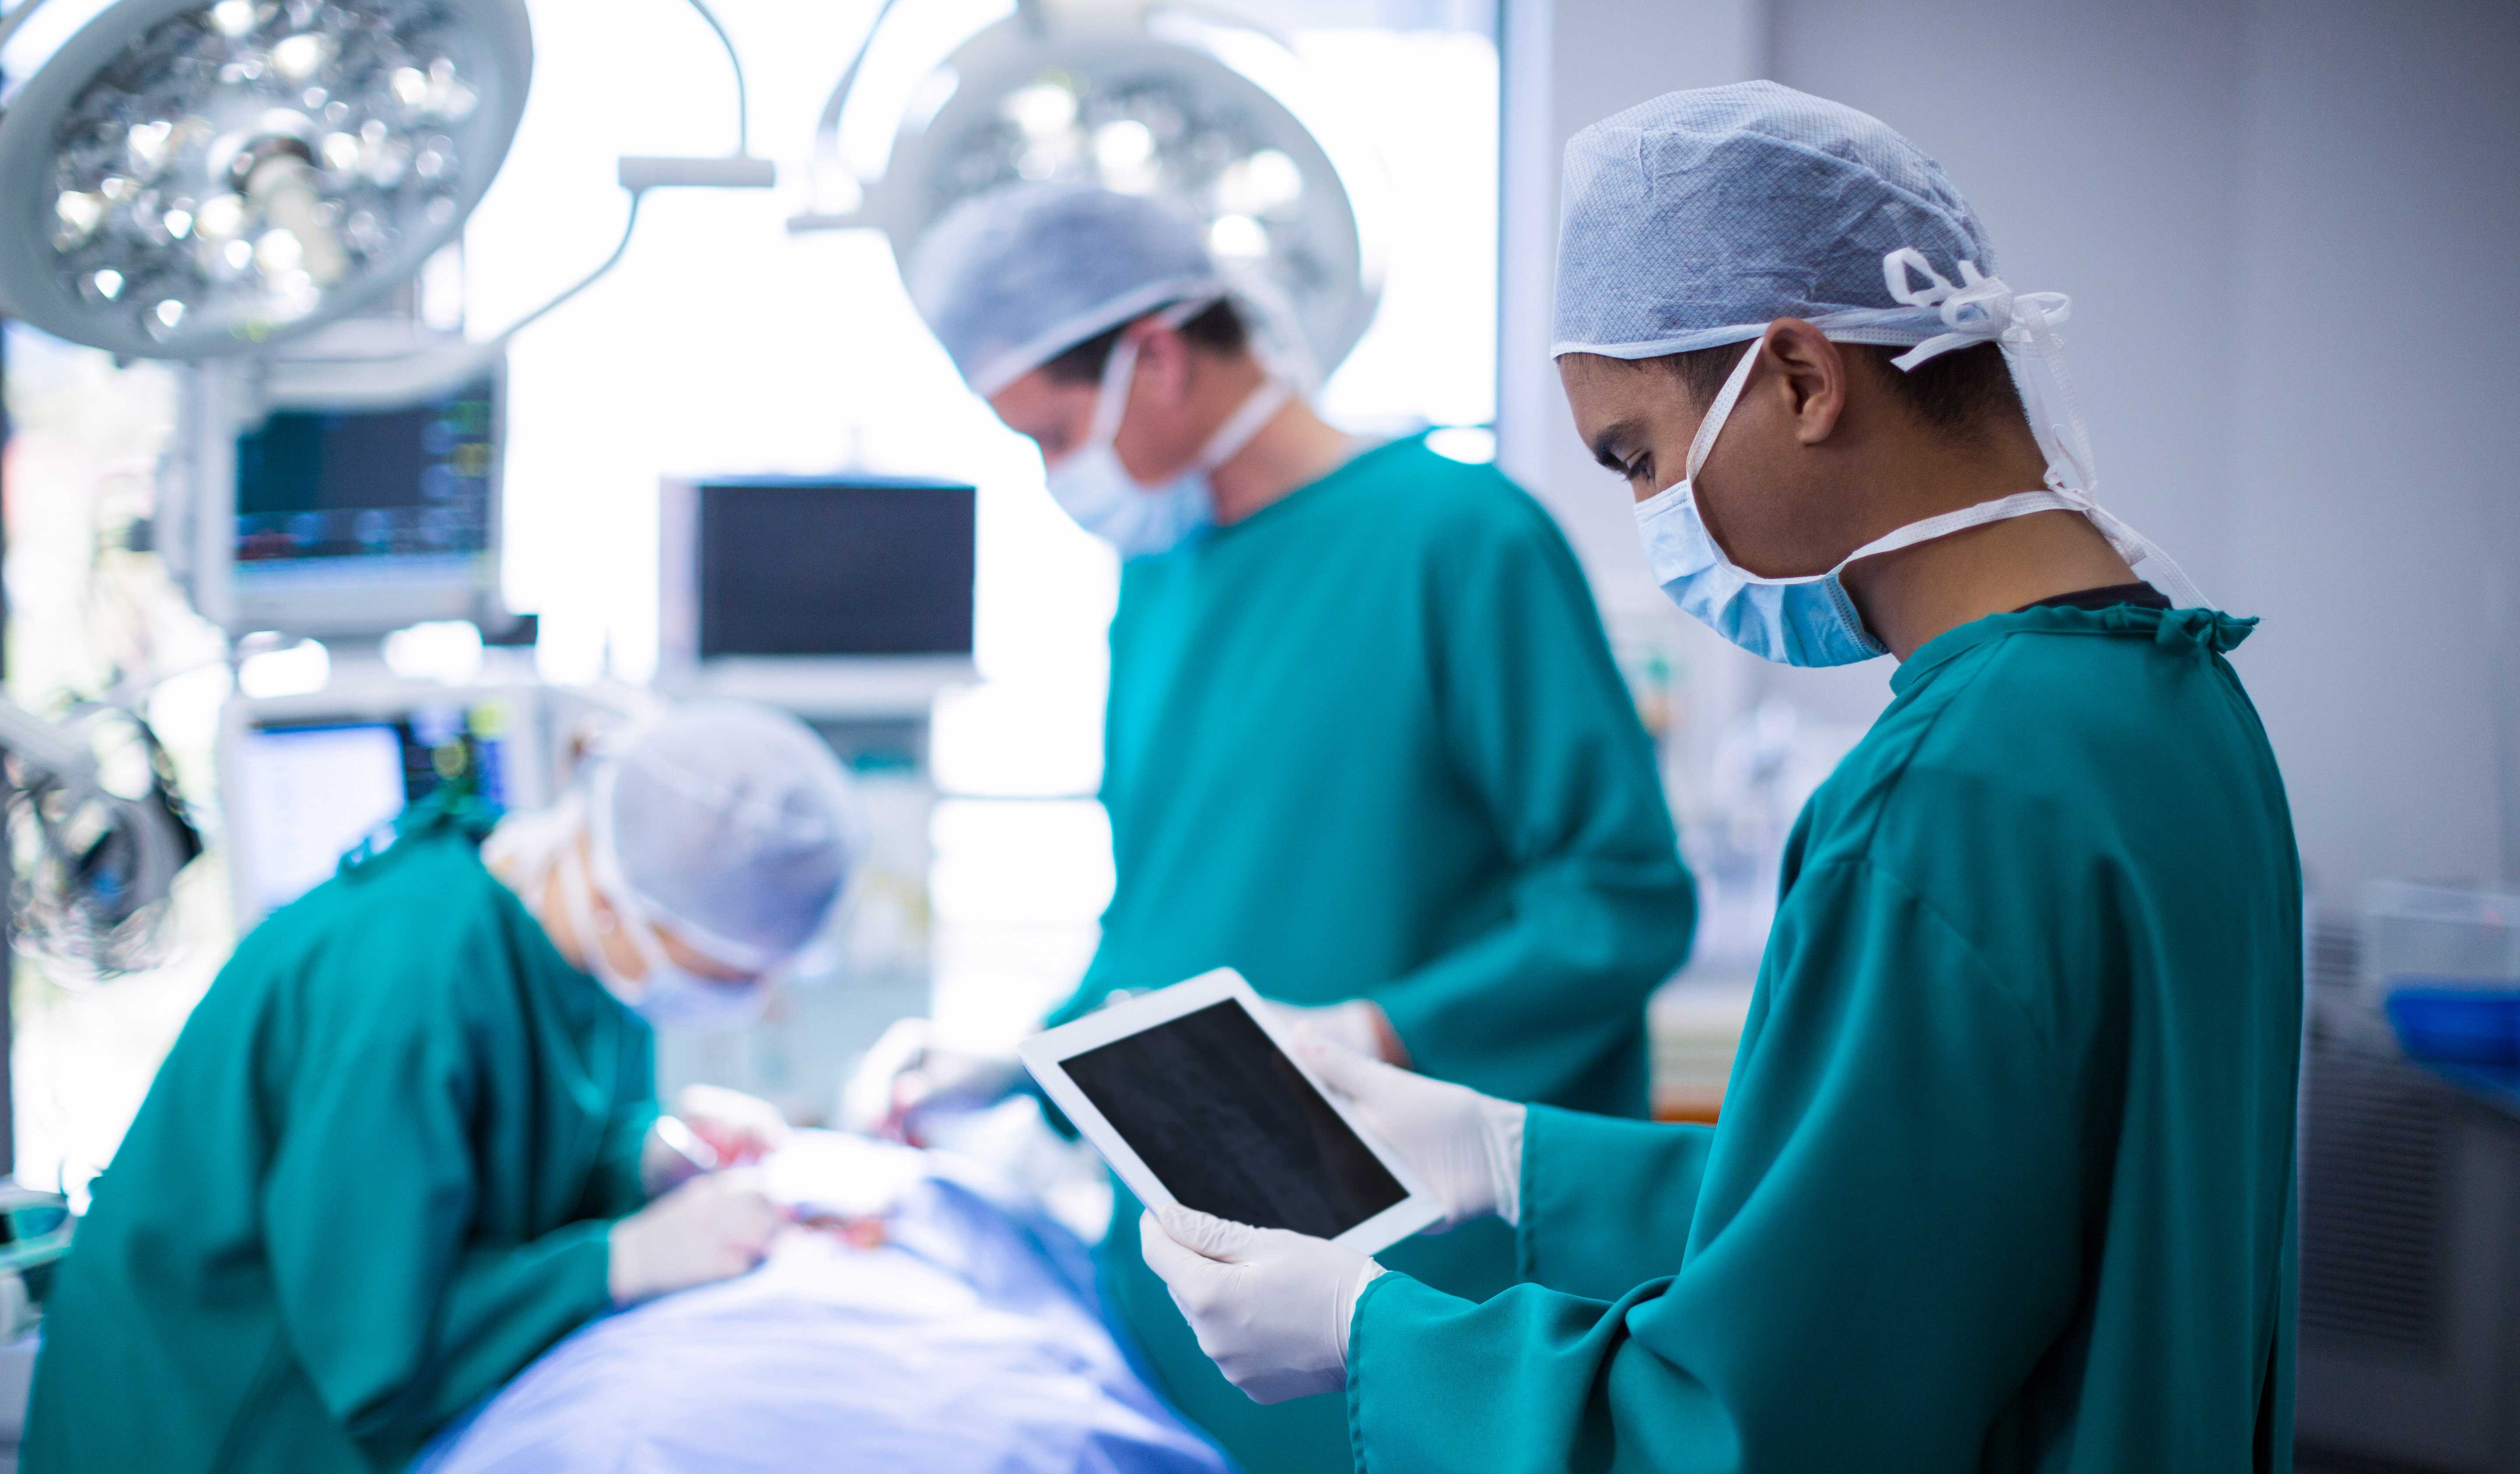 surgeon-using-digital-tablet-operation-theater